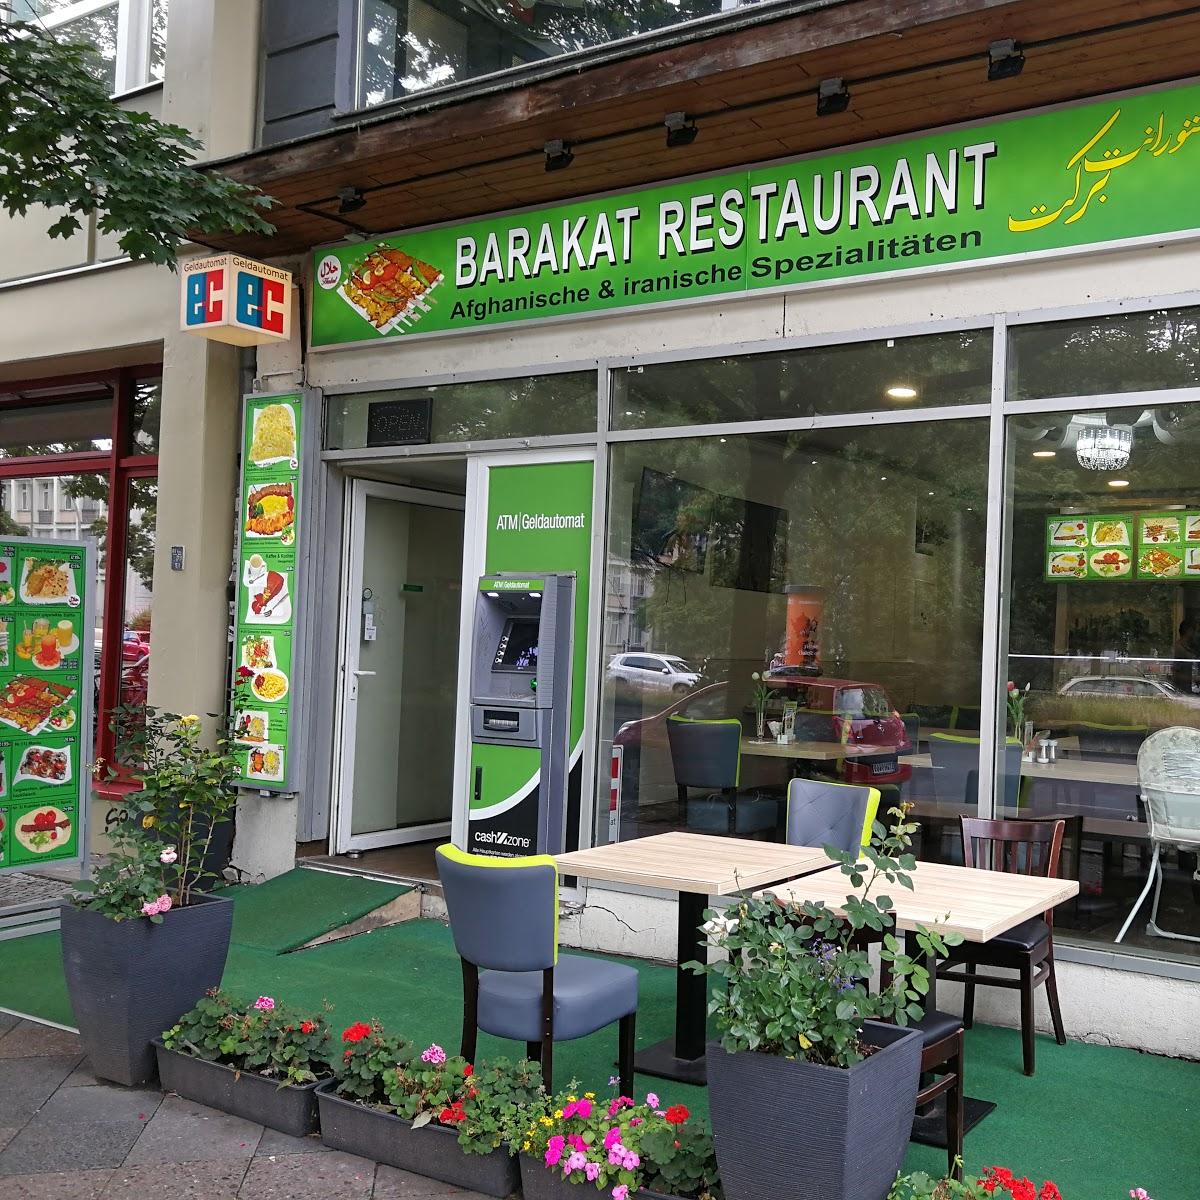 Restaurant "Barakat restaurant" in Berlin